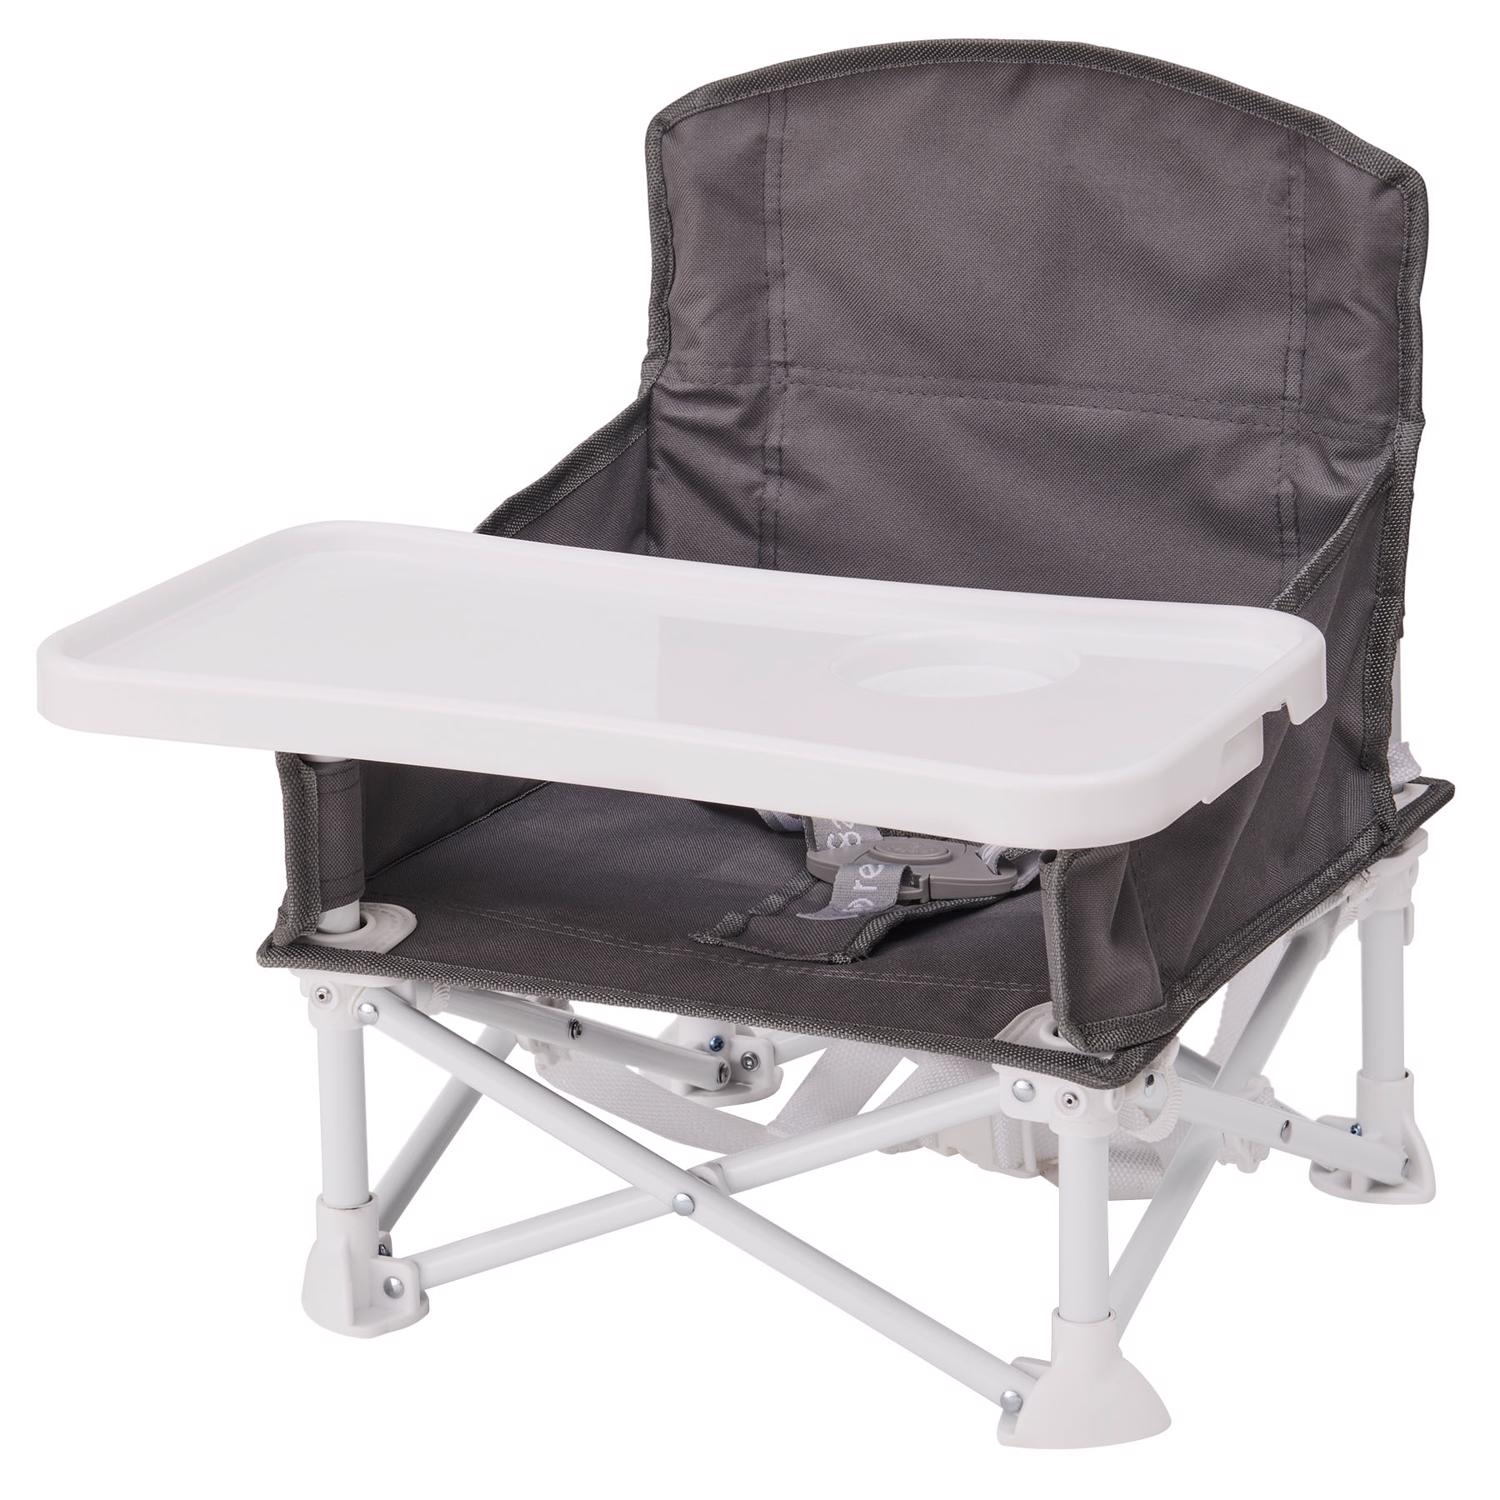 Photos - Paint / Enamel Regalo My Chair Gray Metal/Nylon Portable Booster Seat 1 pk 3512